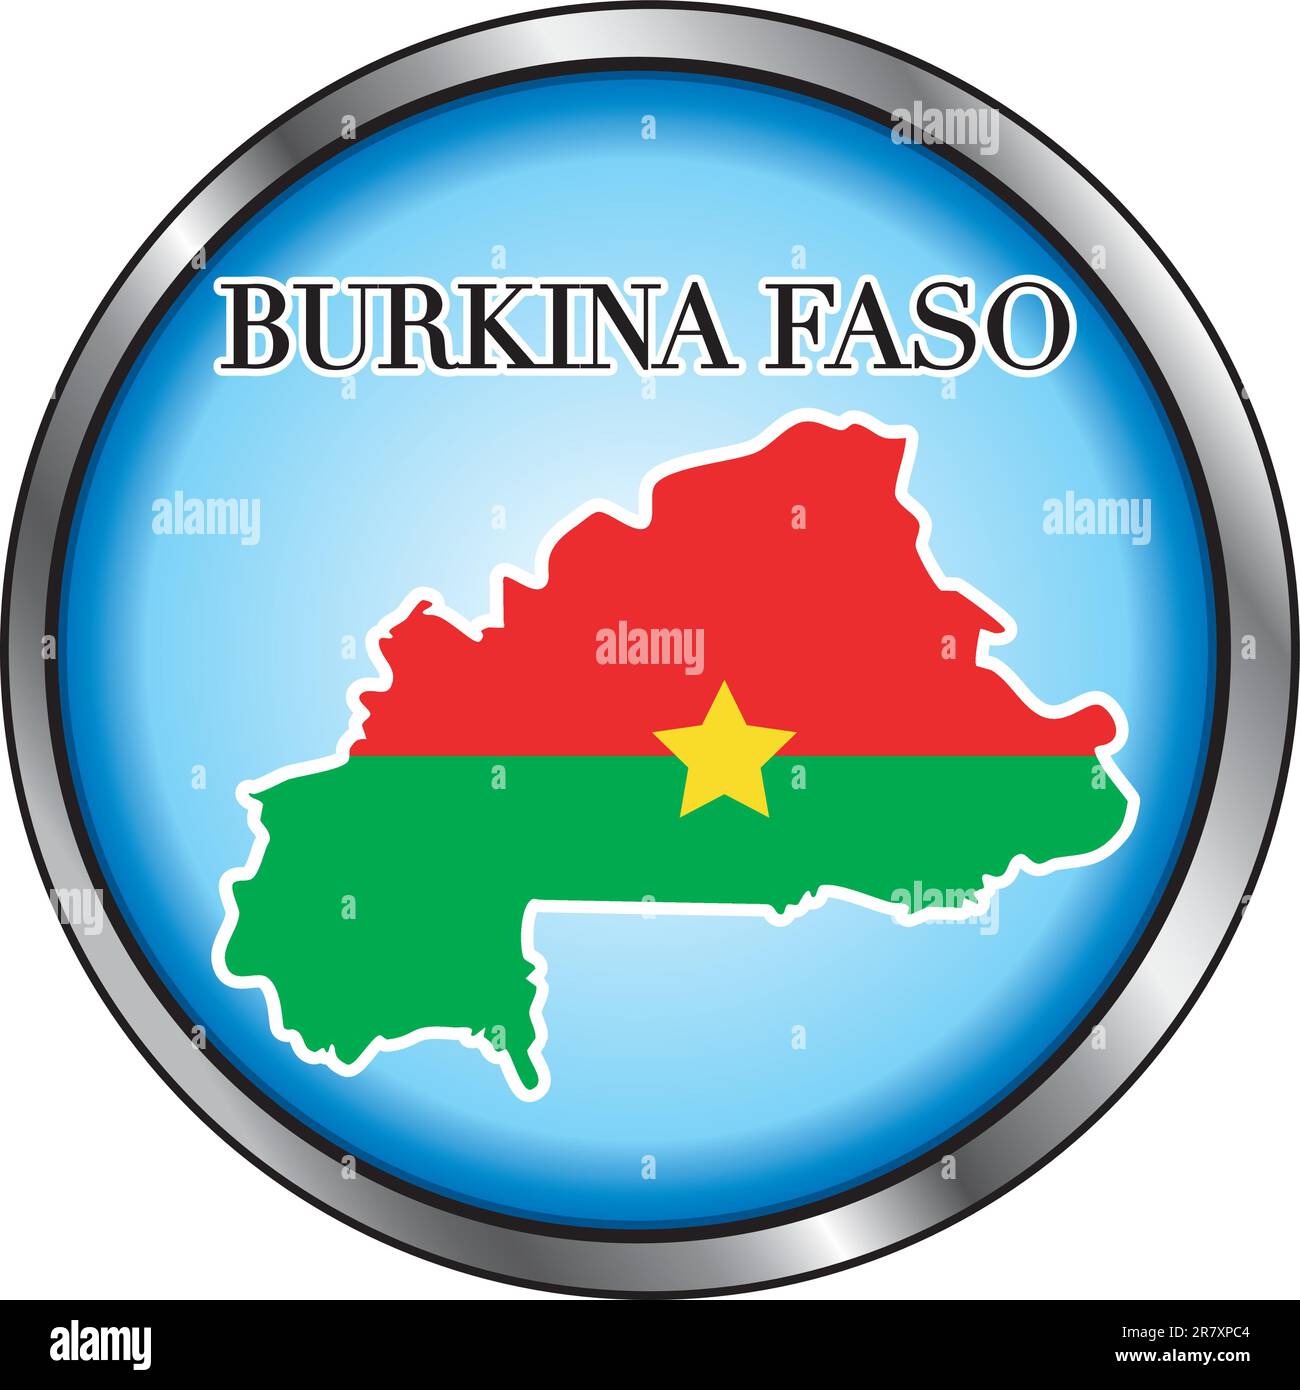 Vektor-Illustration für Burkina Faso, Runde Taste. Stock Vektor